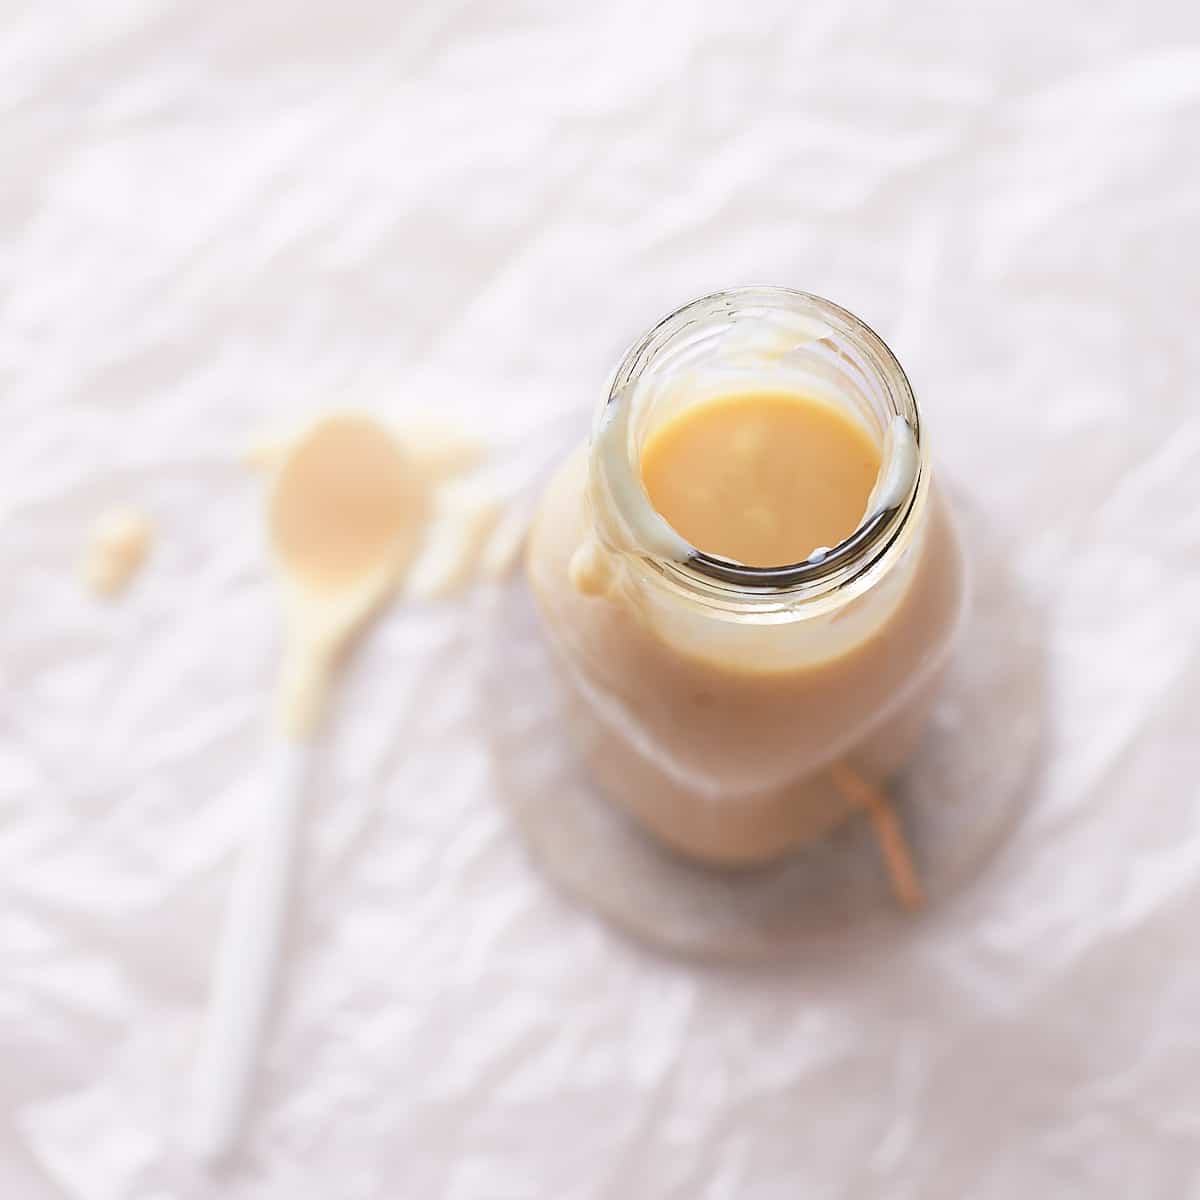 Decorative picture of condensed milk in a glass jar